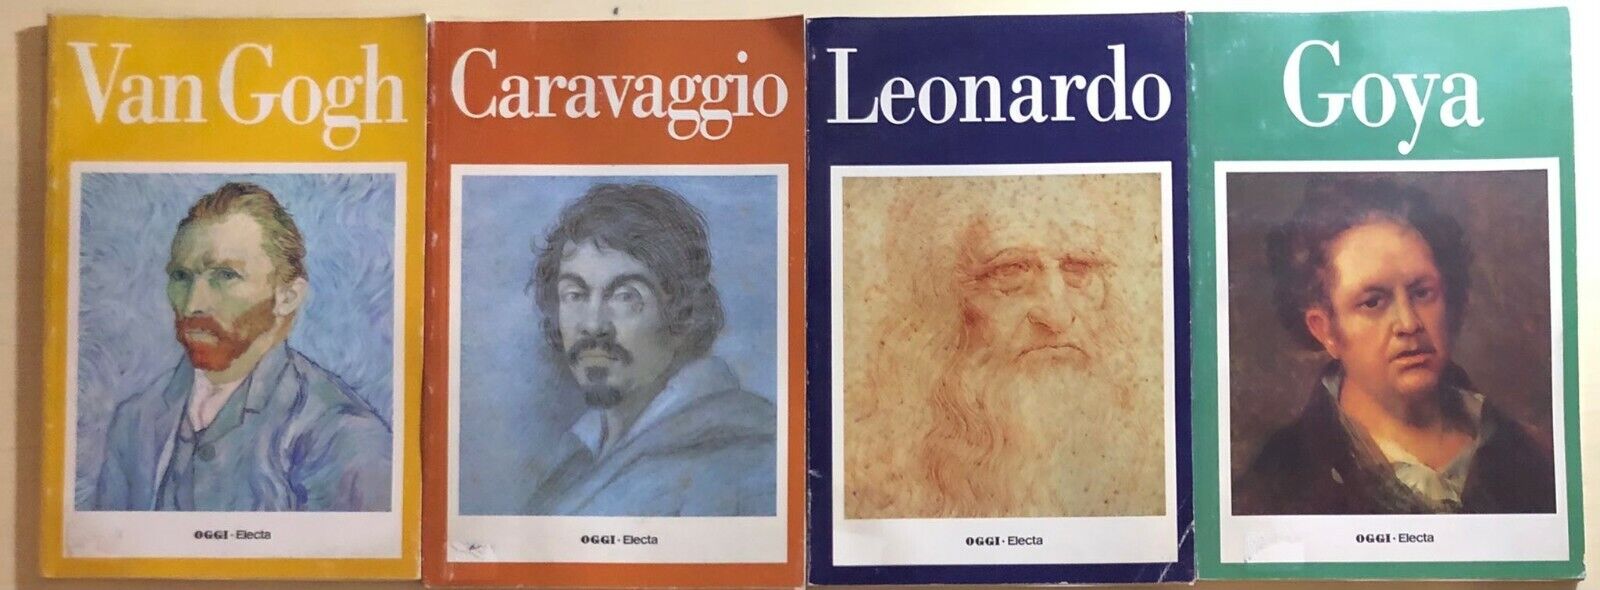 Van Gogh-Caravaggio-Leonardo-Goya di Aa.vv., 1993, Oggi Electa